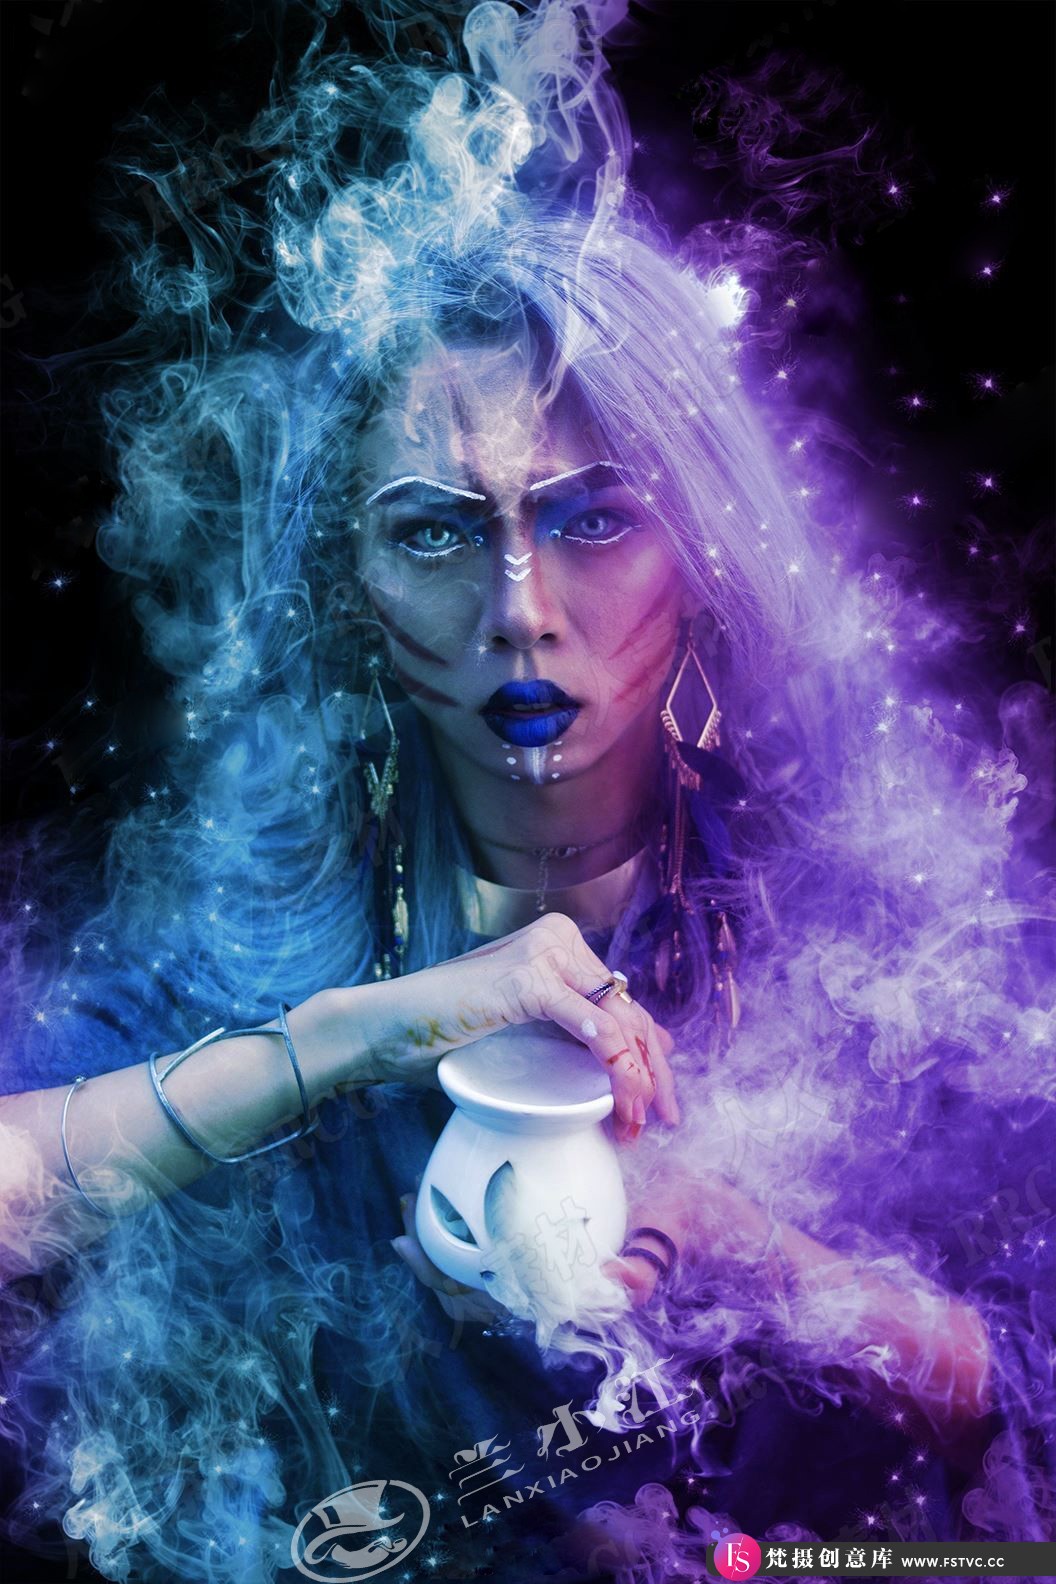 [PS动作下载]梦幻魔术风格蓝紫色调烟雾缭绕人像艺术图像处理特效PS动作-梵摄创意库